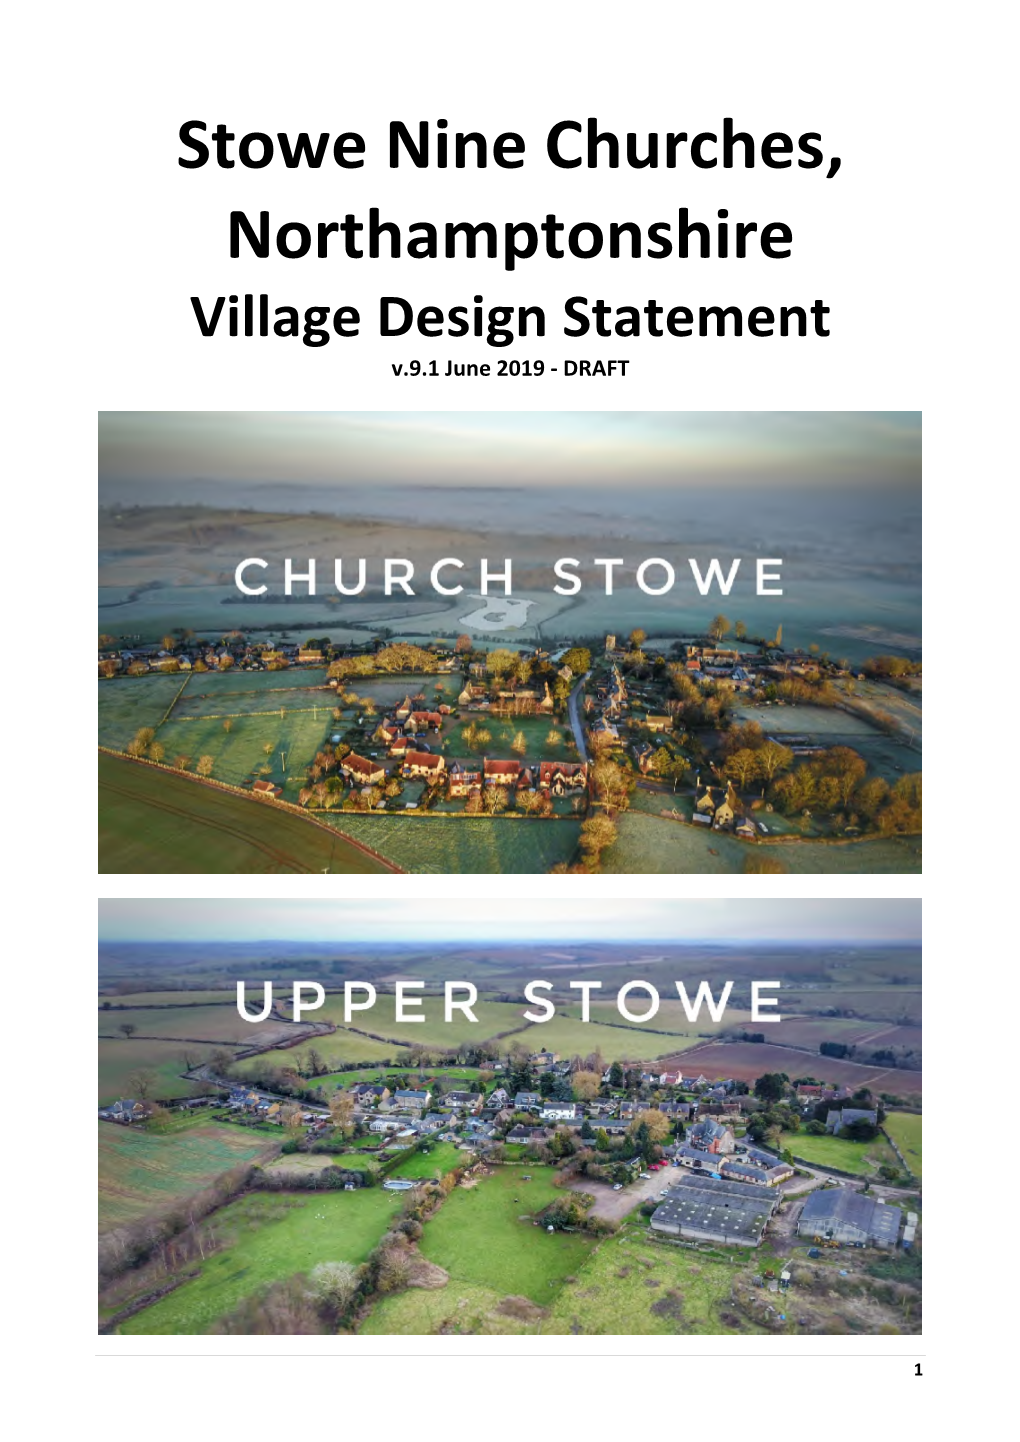 Stowe Nine Churches, Northamptonshire Village Design Statement V.9.1 June 2019 - DRAFT